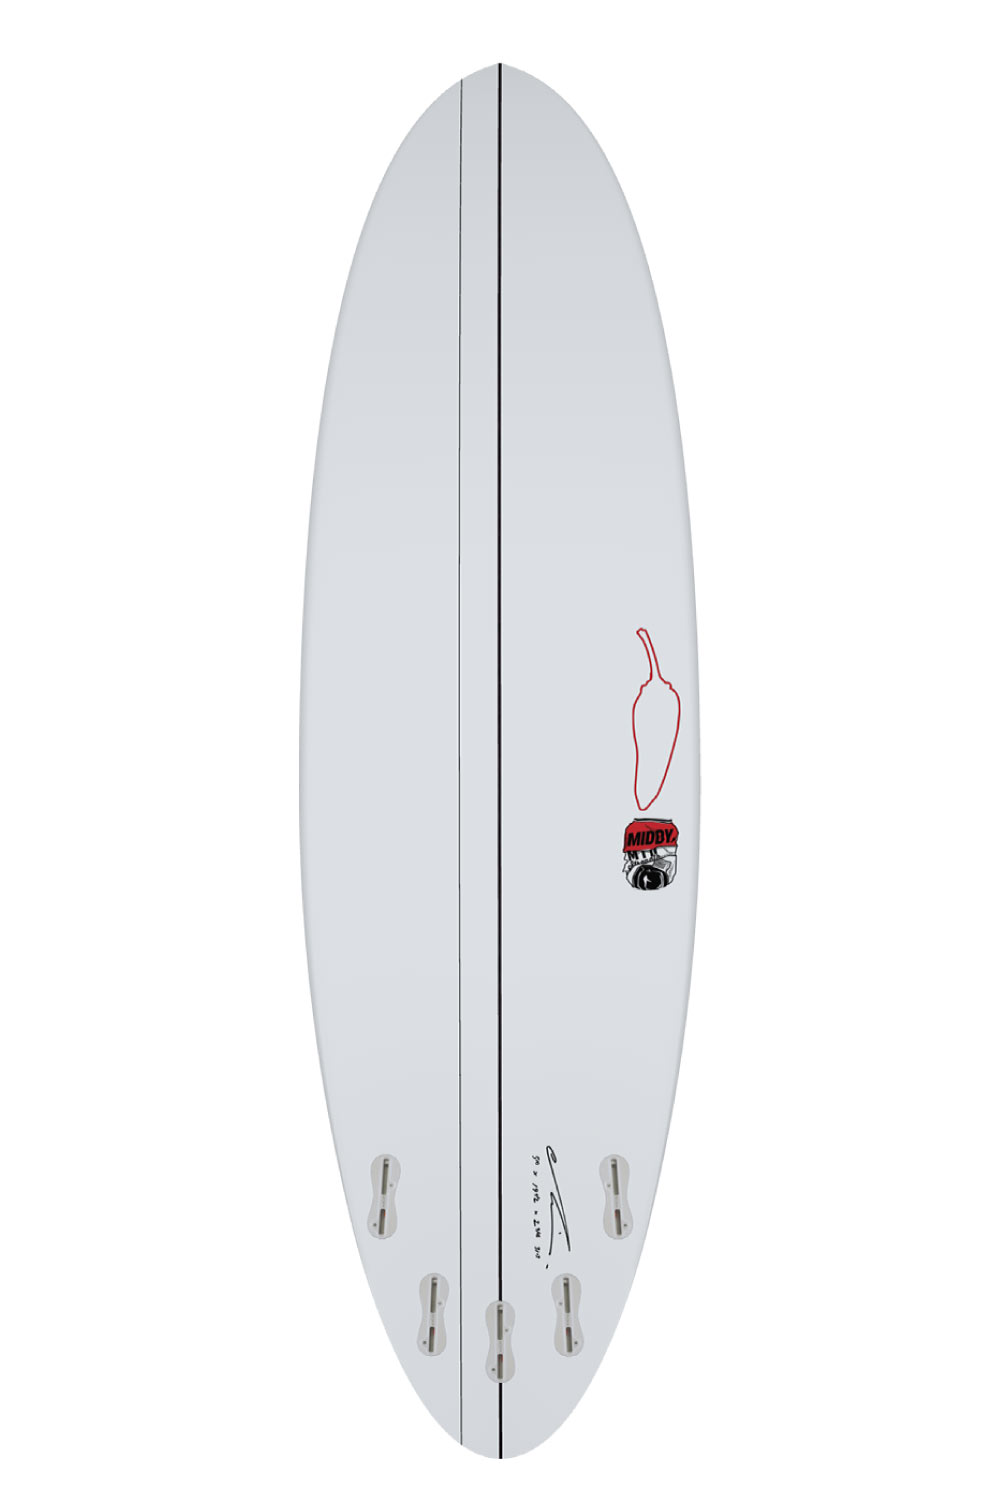 Chilli Middy PU Surfboard